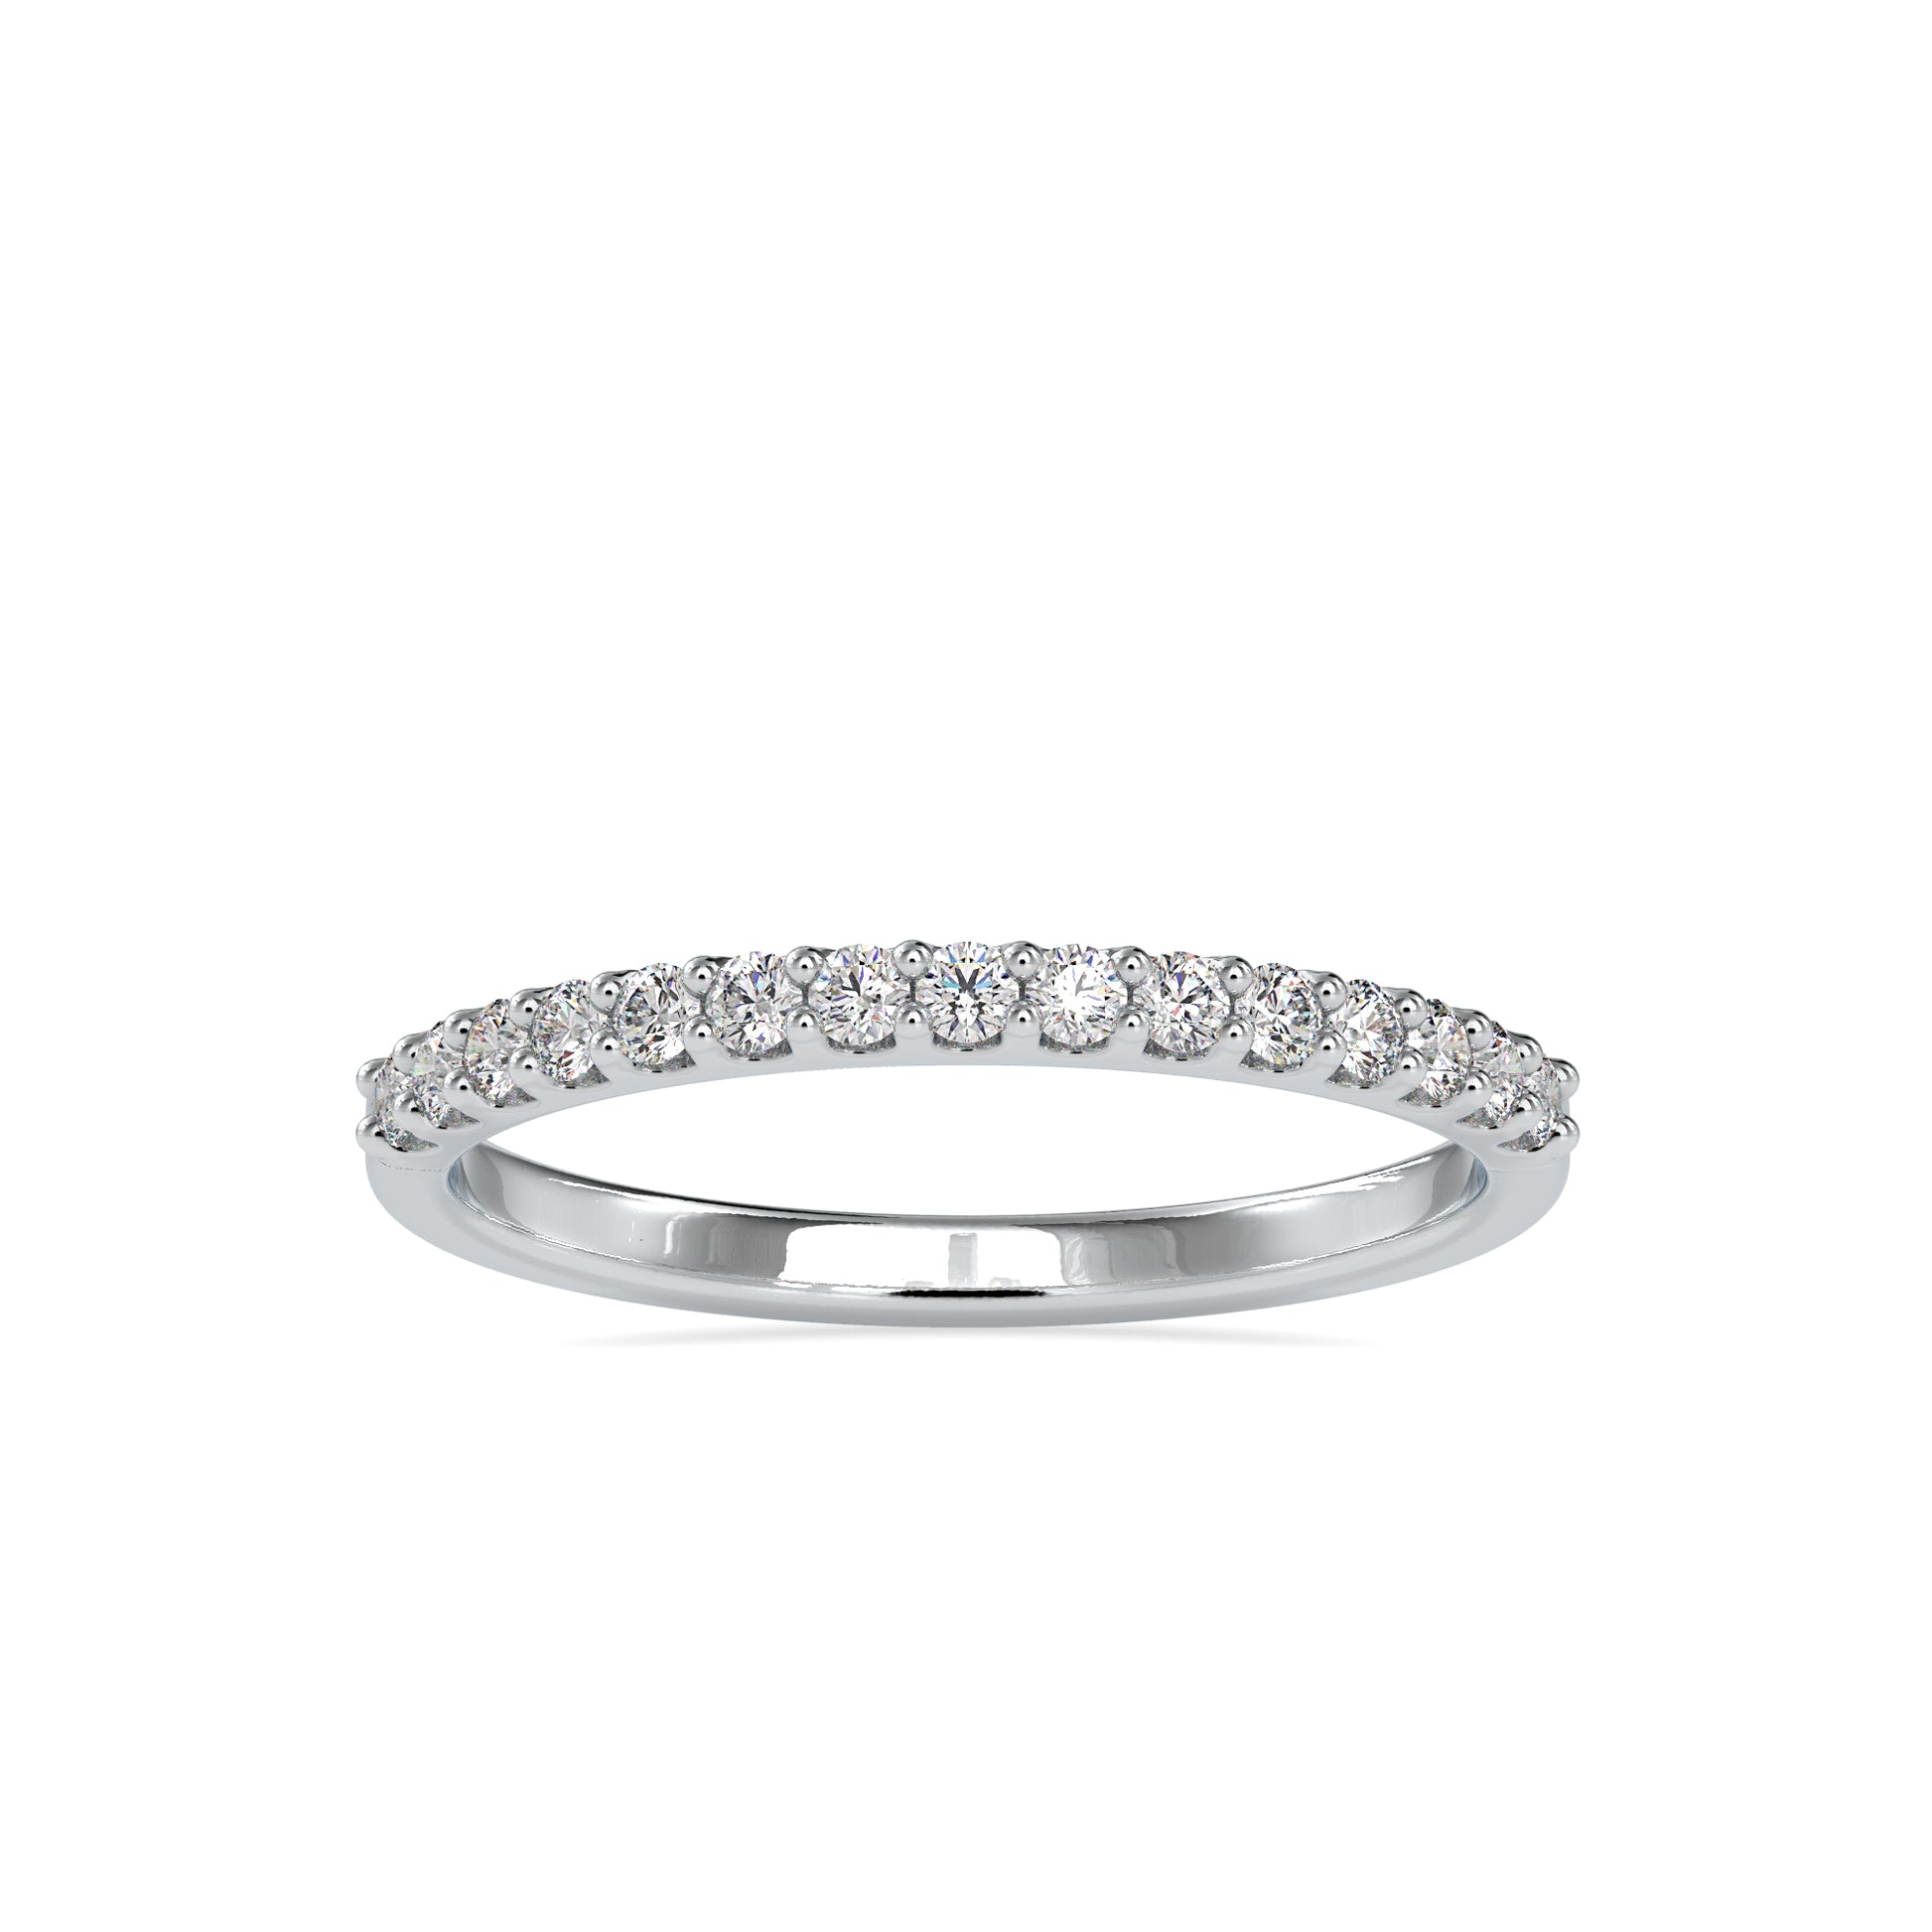 The Brizo Ring - Vai Ra Moissanite diamond